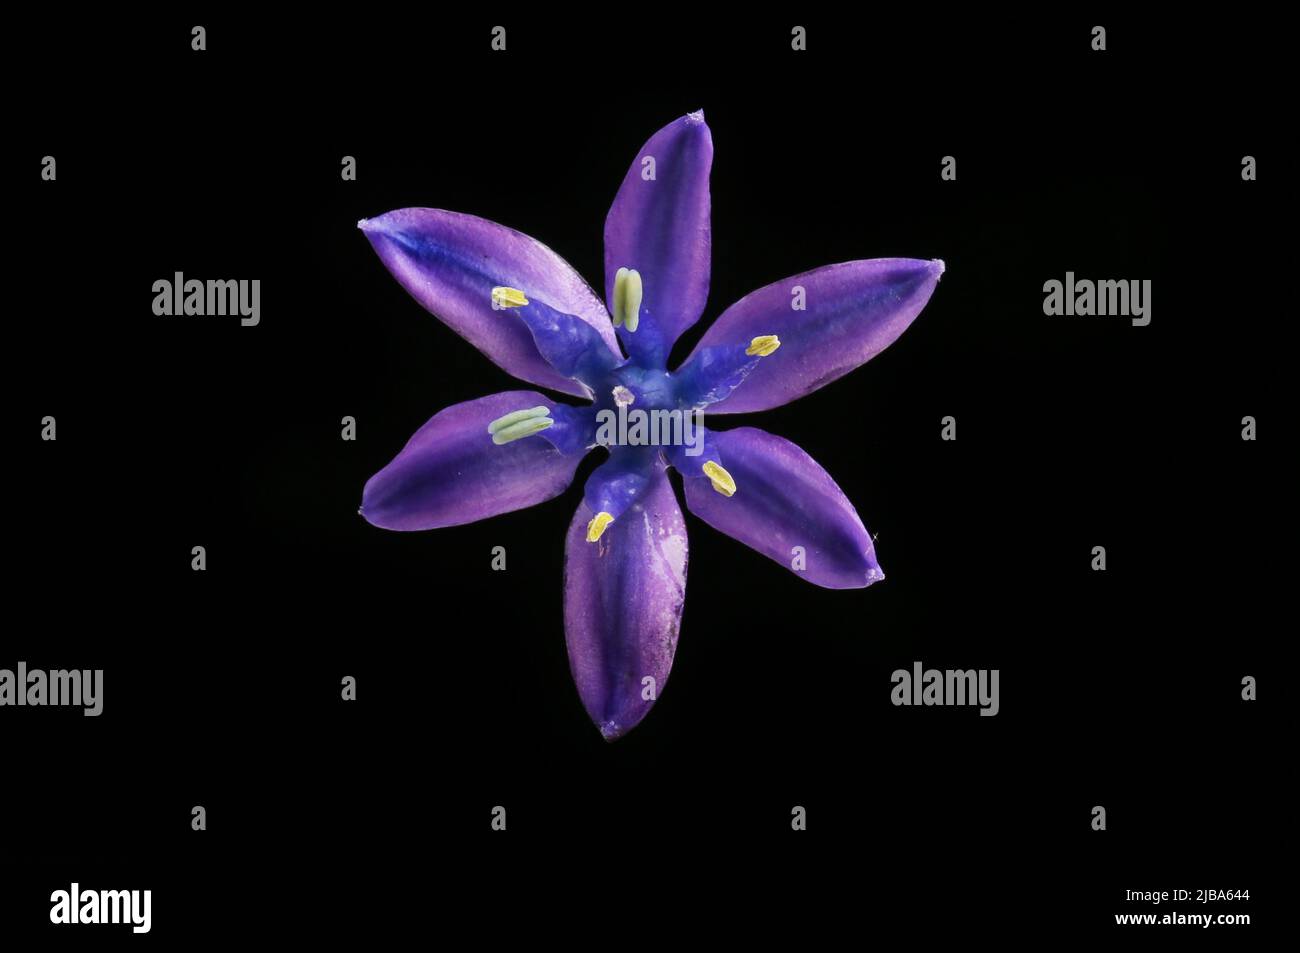 Flor individual de scilla aislada contra el negro Foto de stock